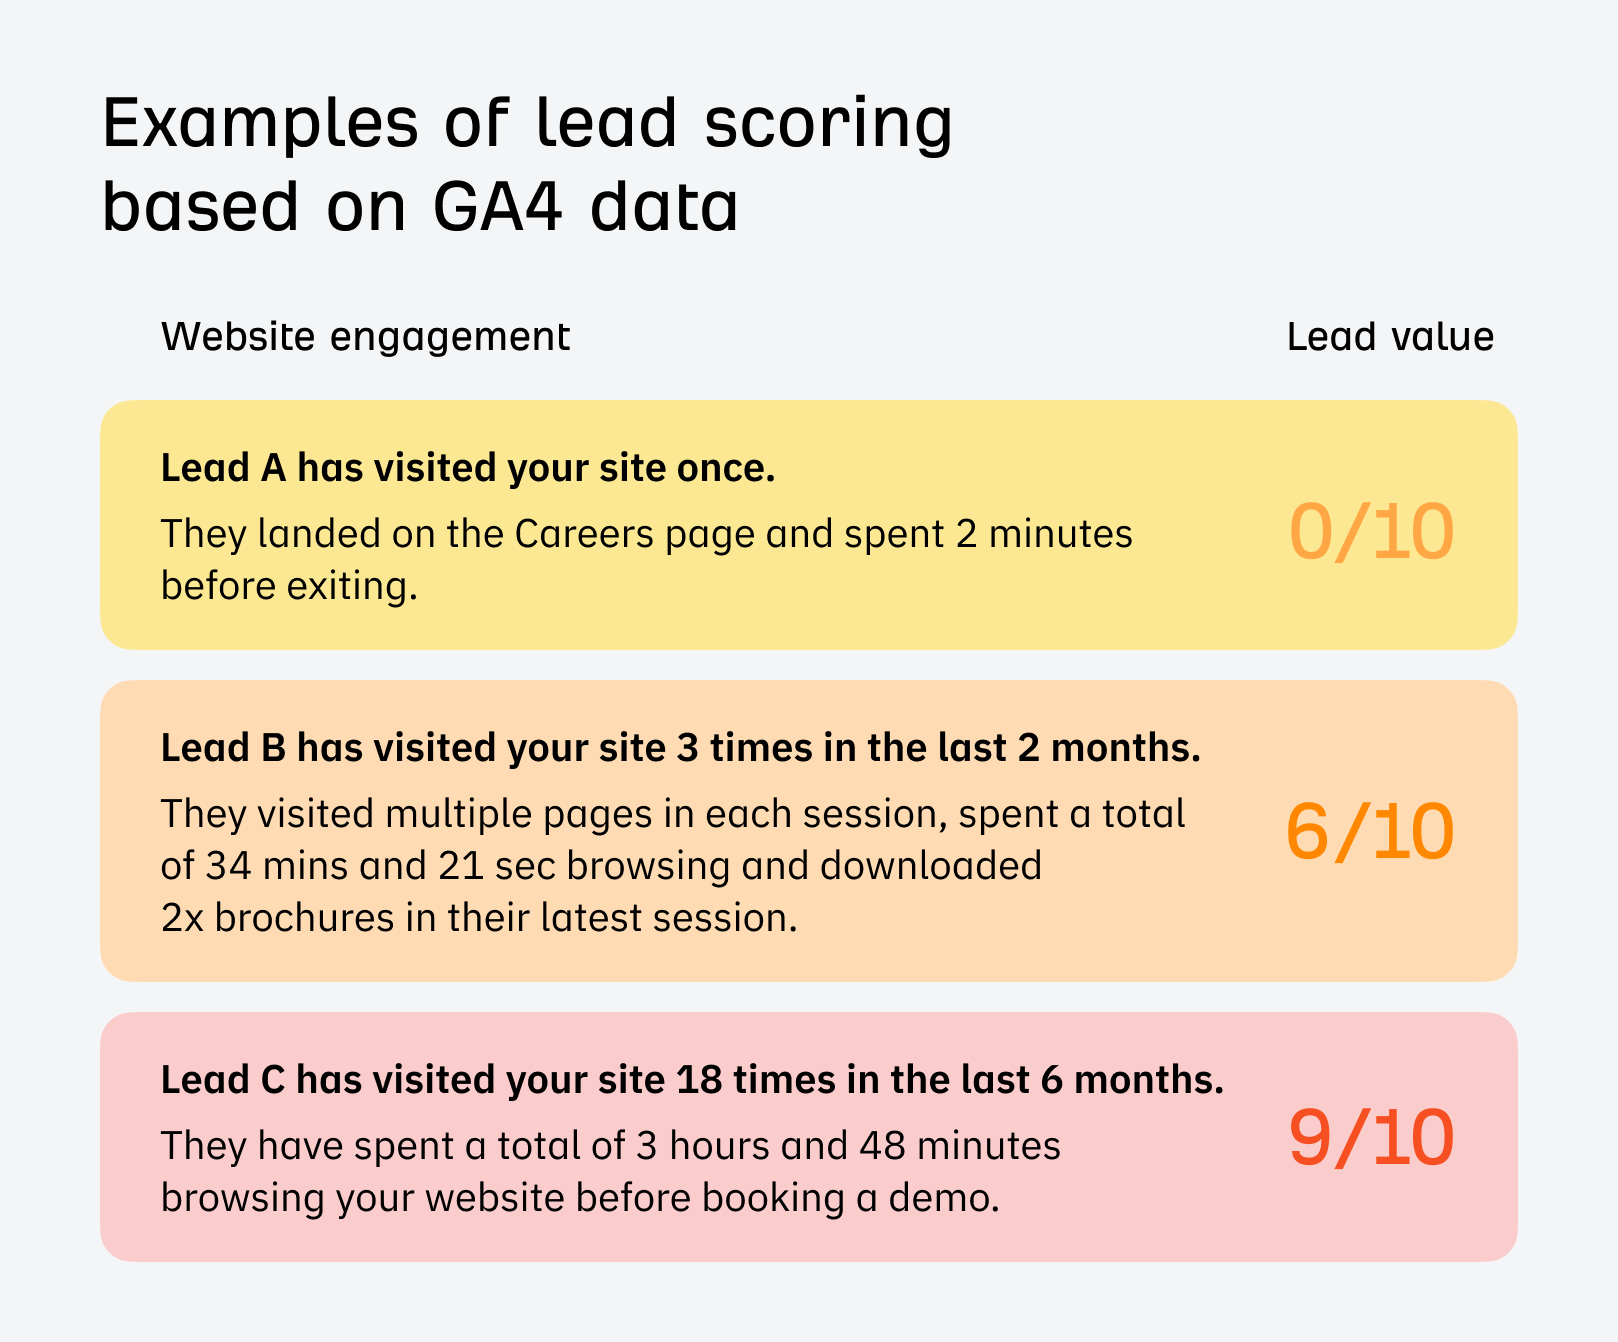 Examples of lead scoring based on GA4 data.